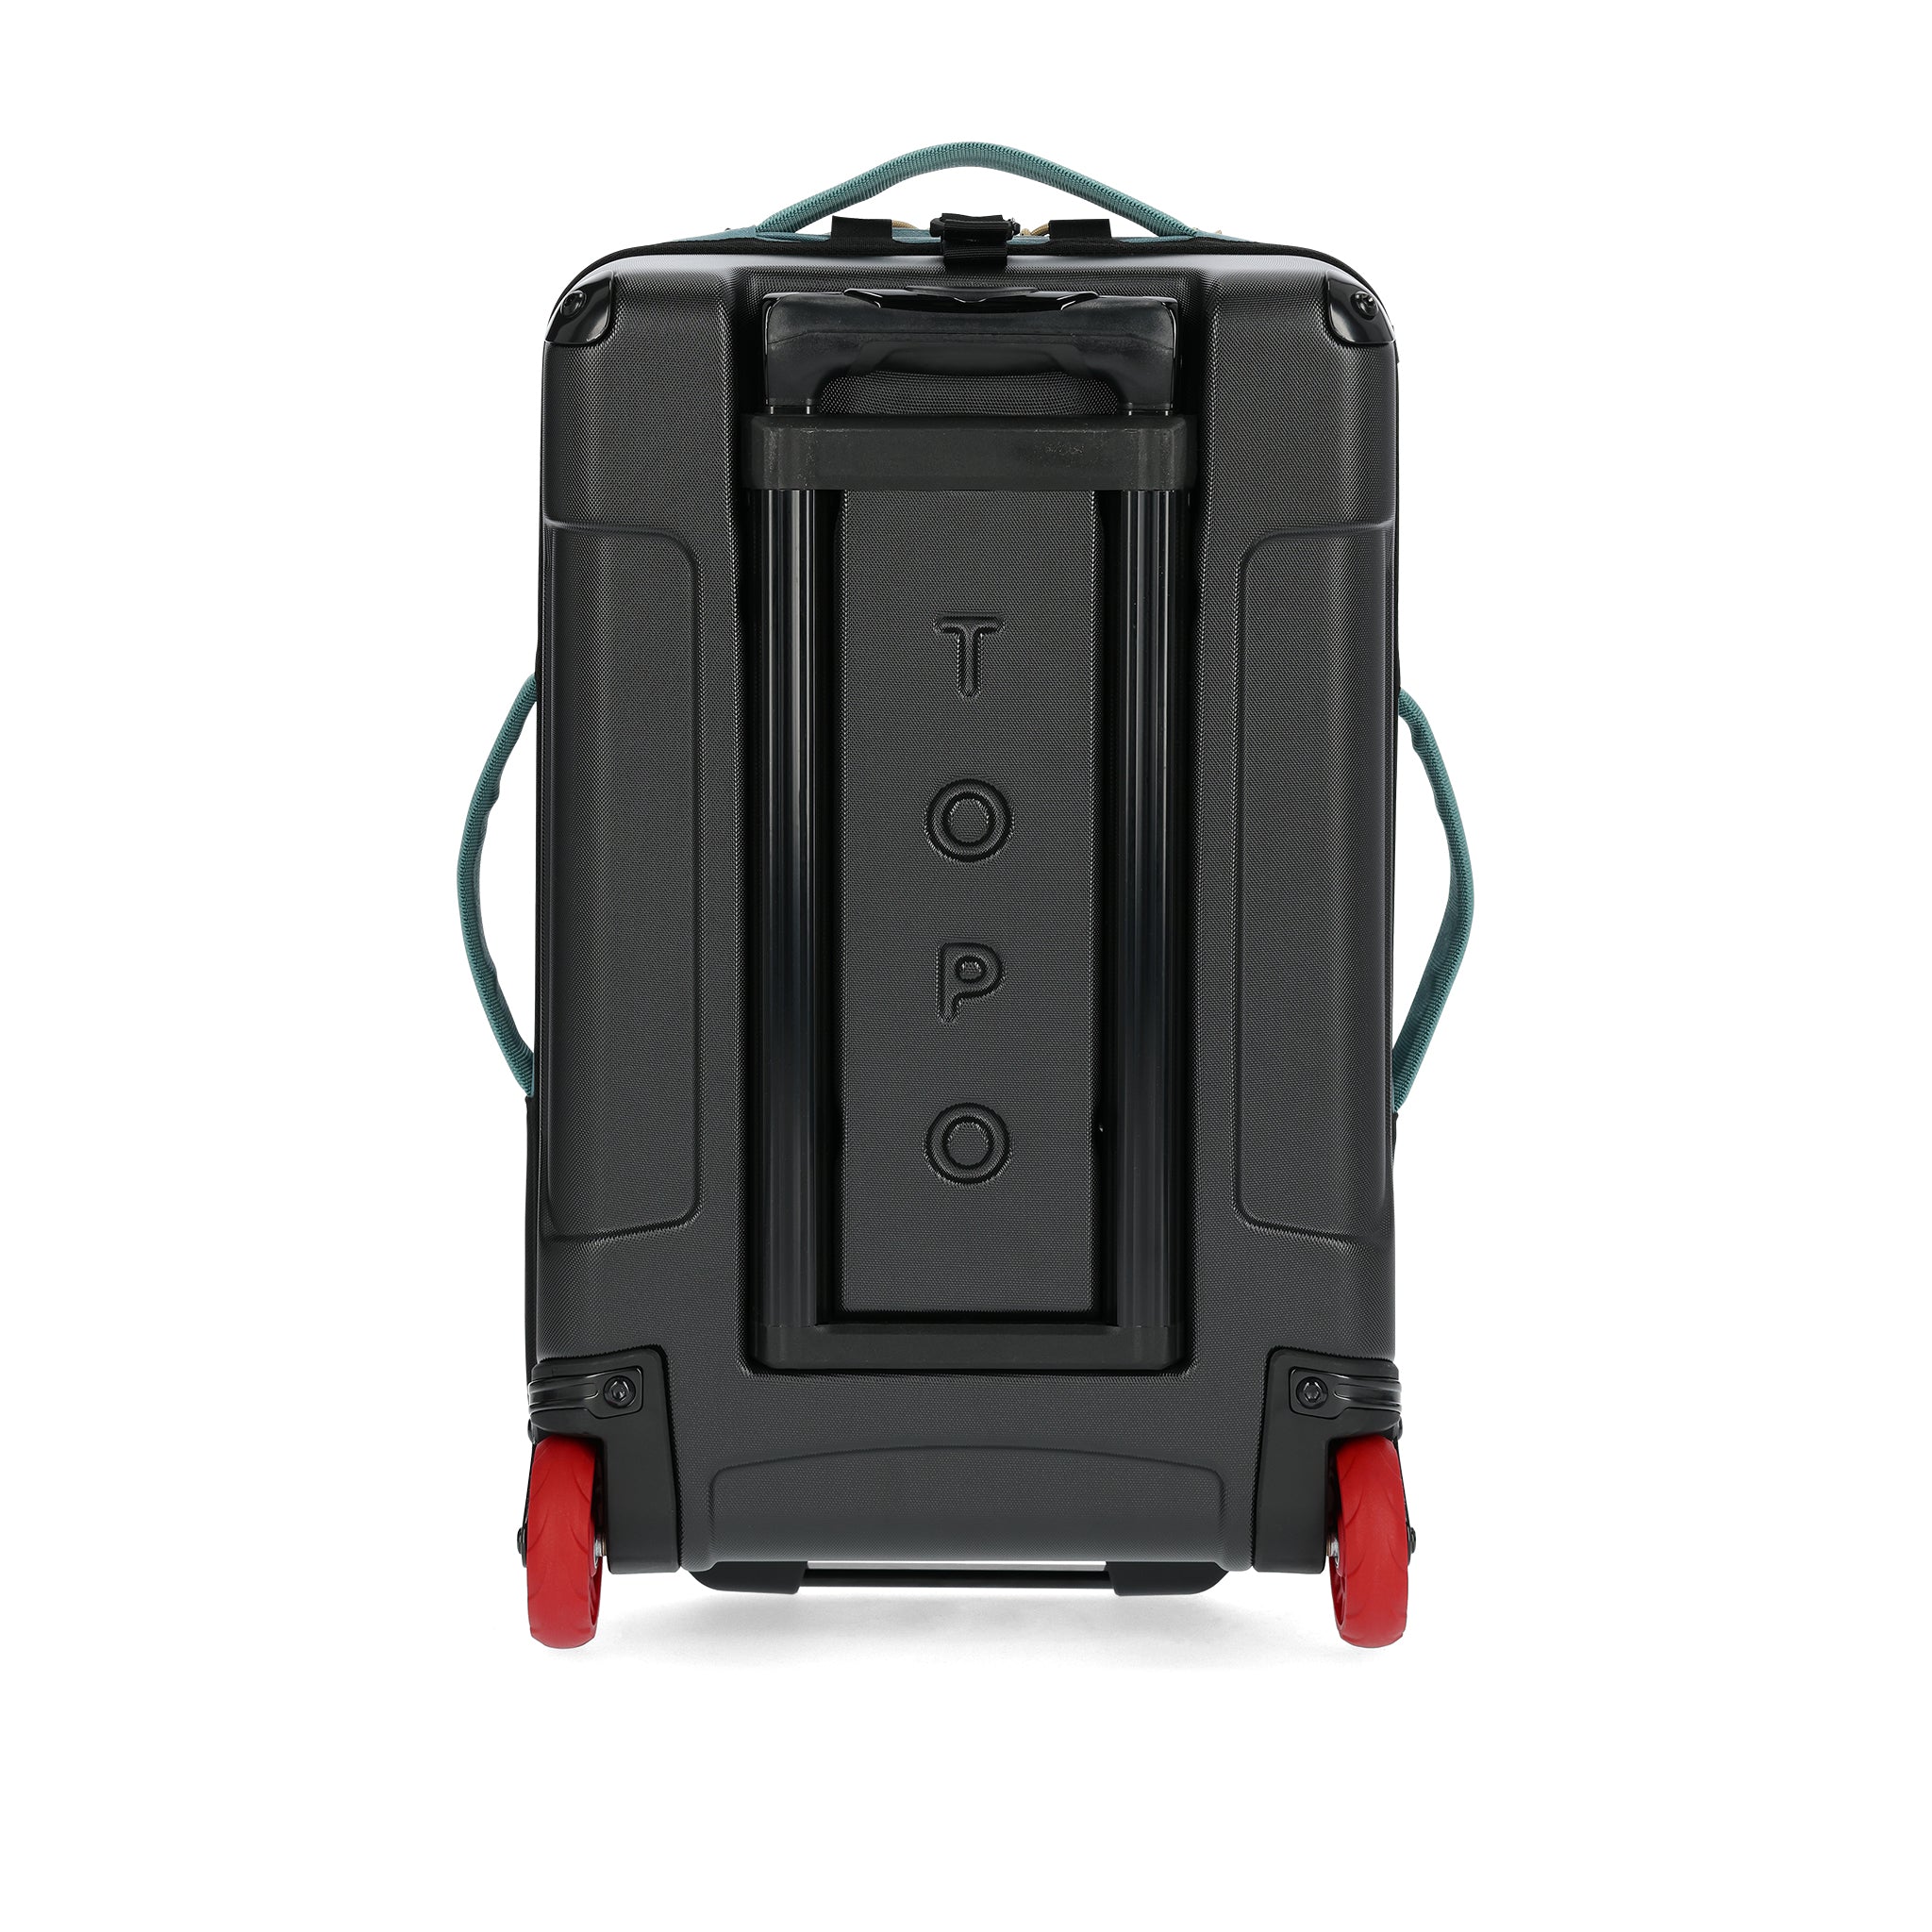 Global Travel 44L wheeled travel bag | Topo Designs